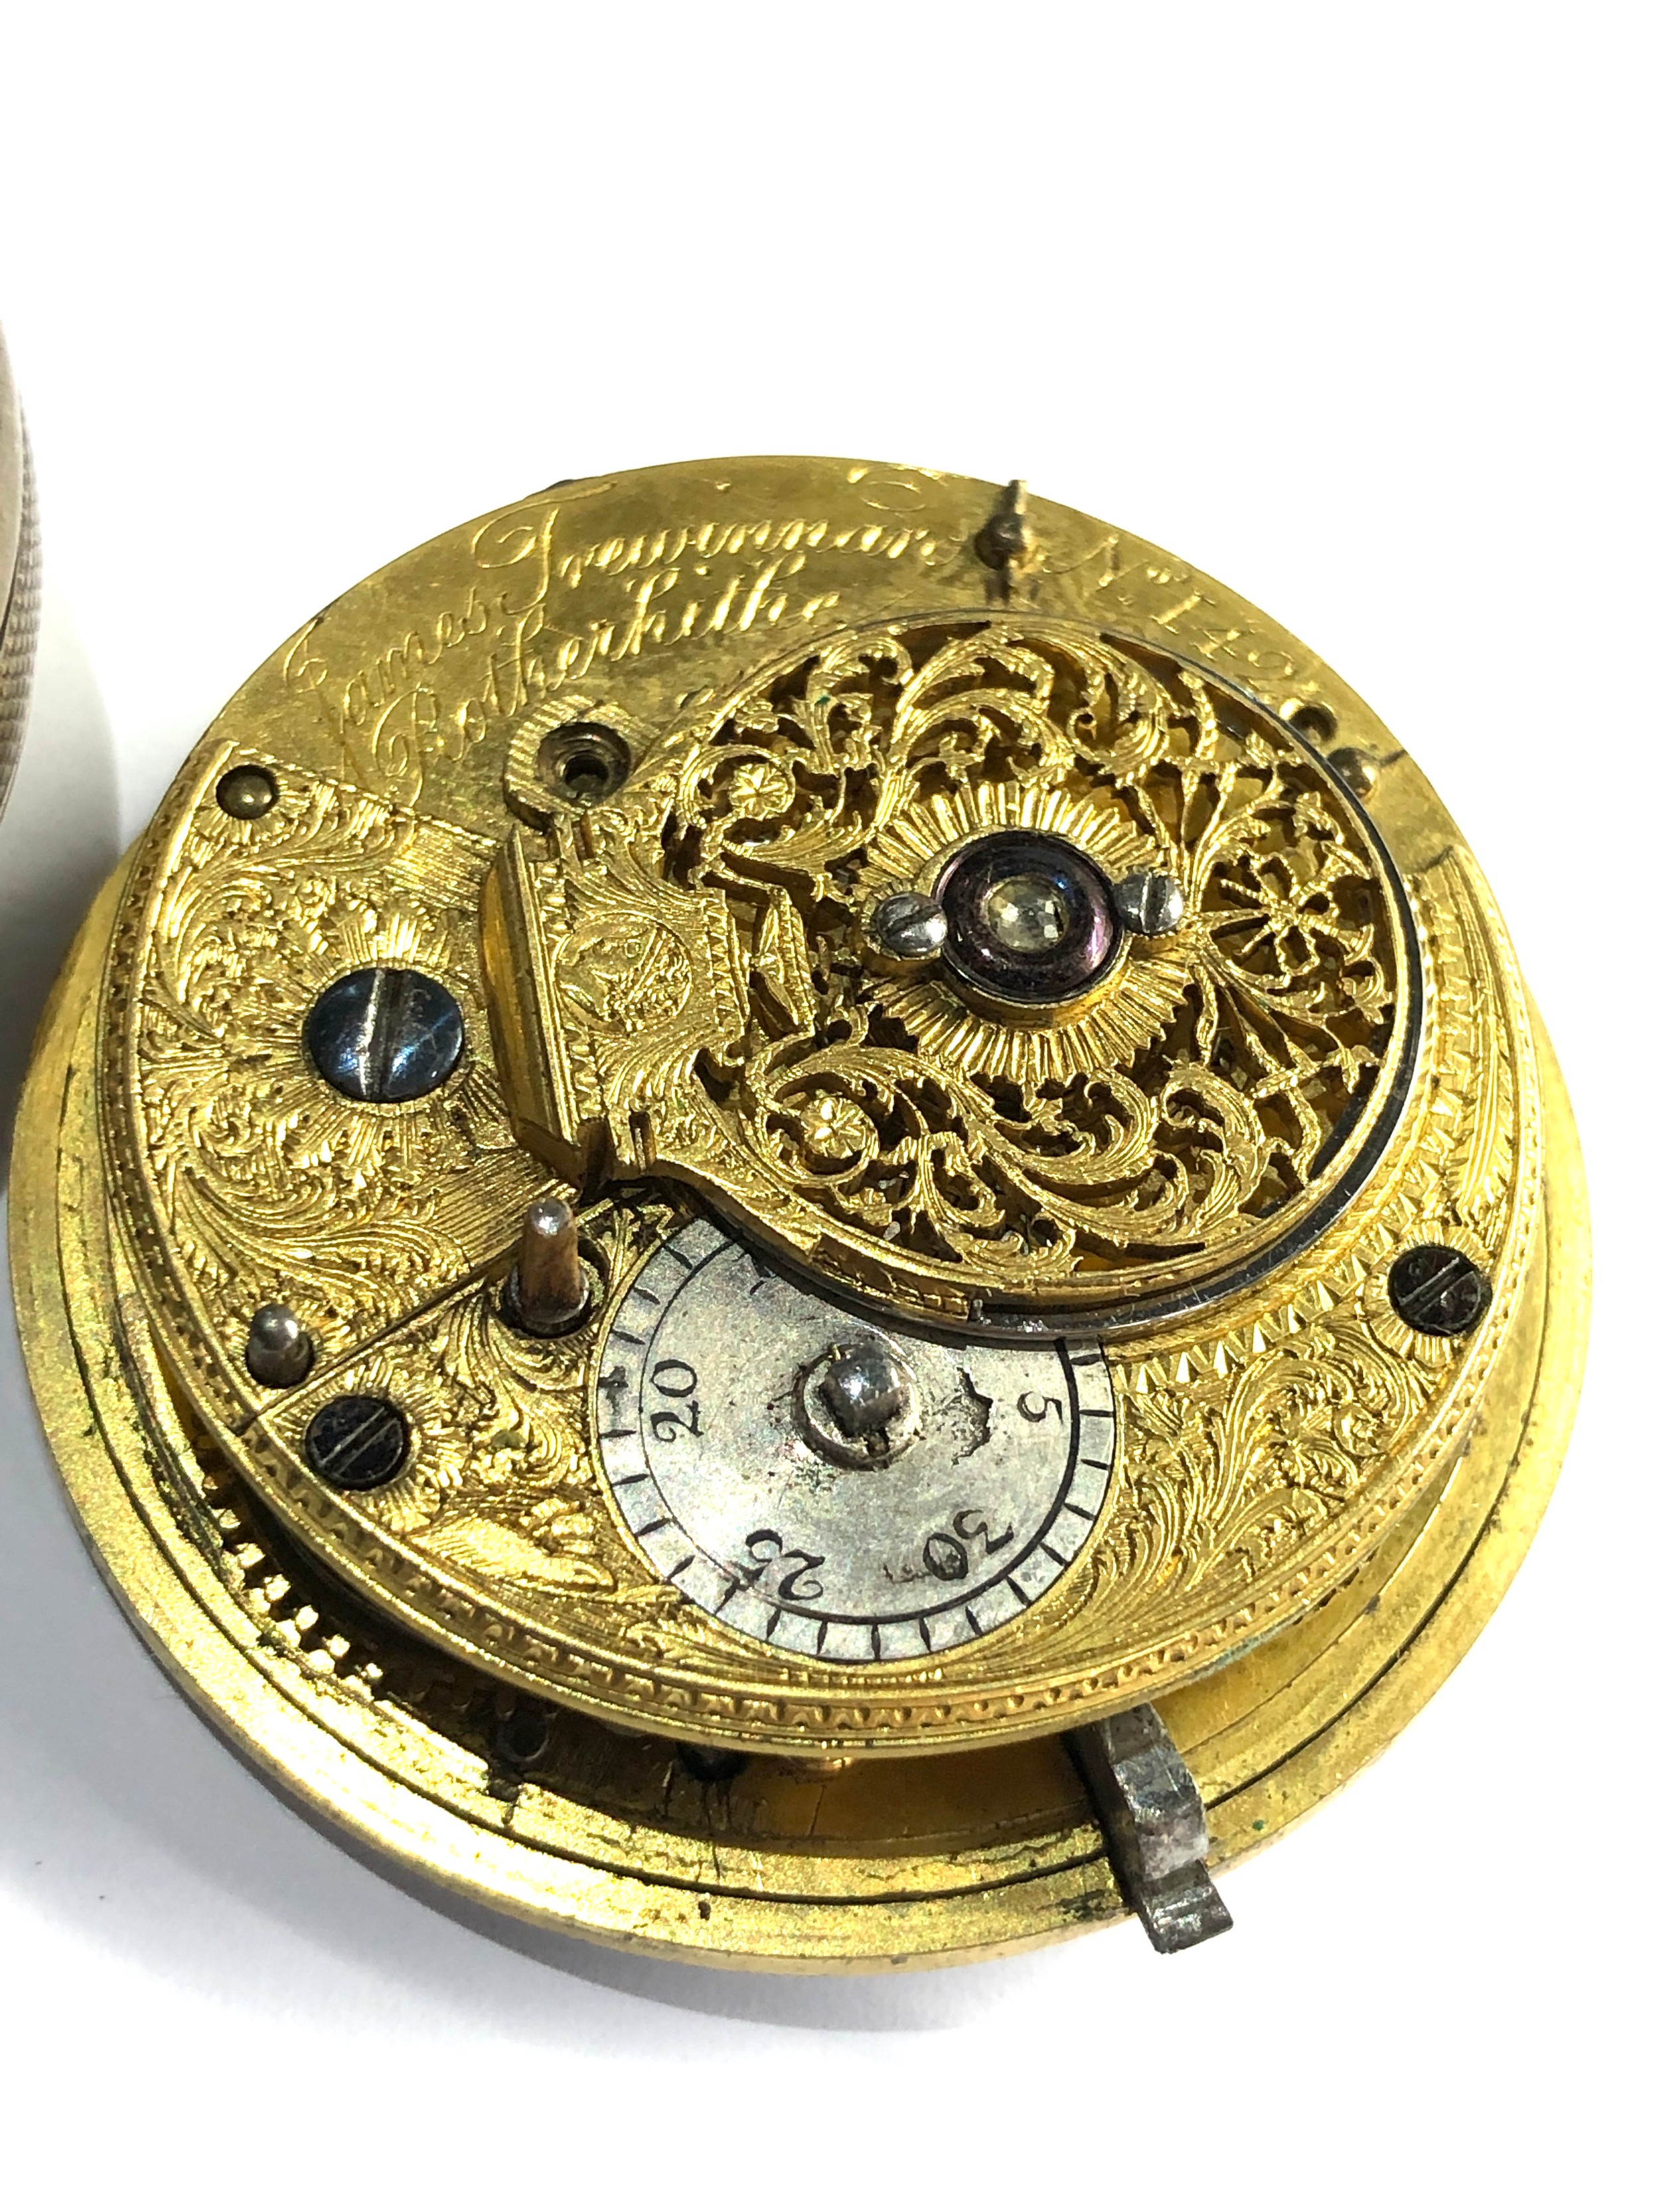 Antique silver verge fusee pocket watch diamond end stone spares or repair - Bild 2 aus 7